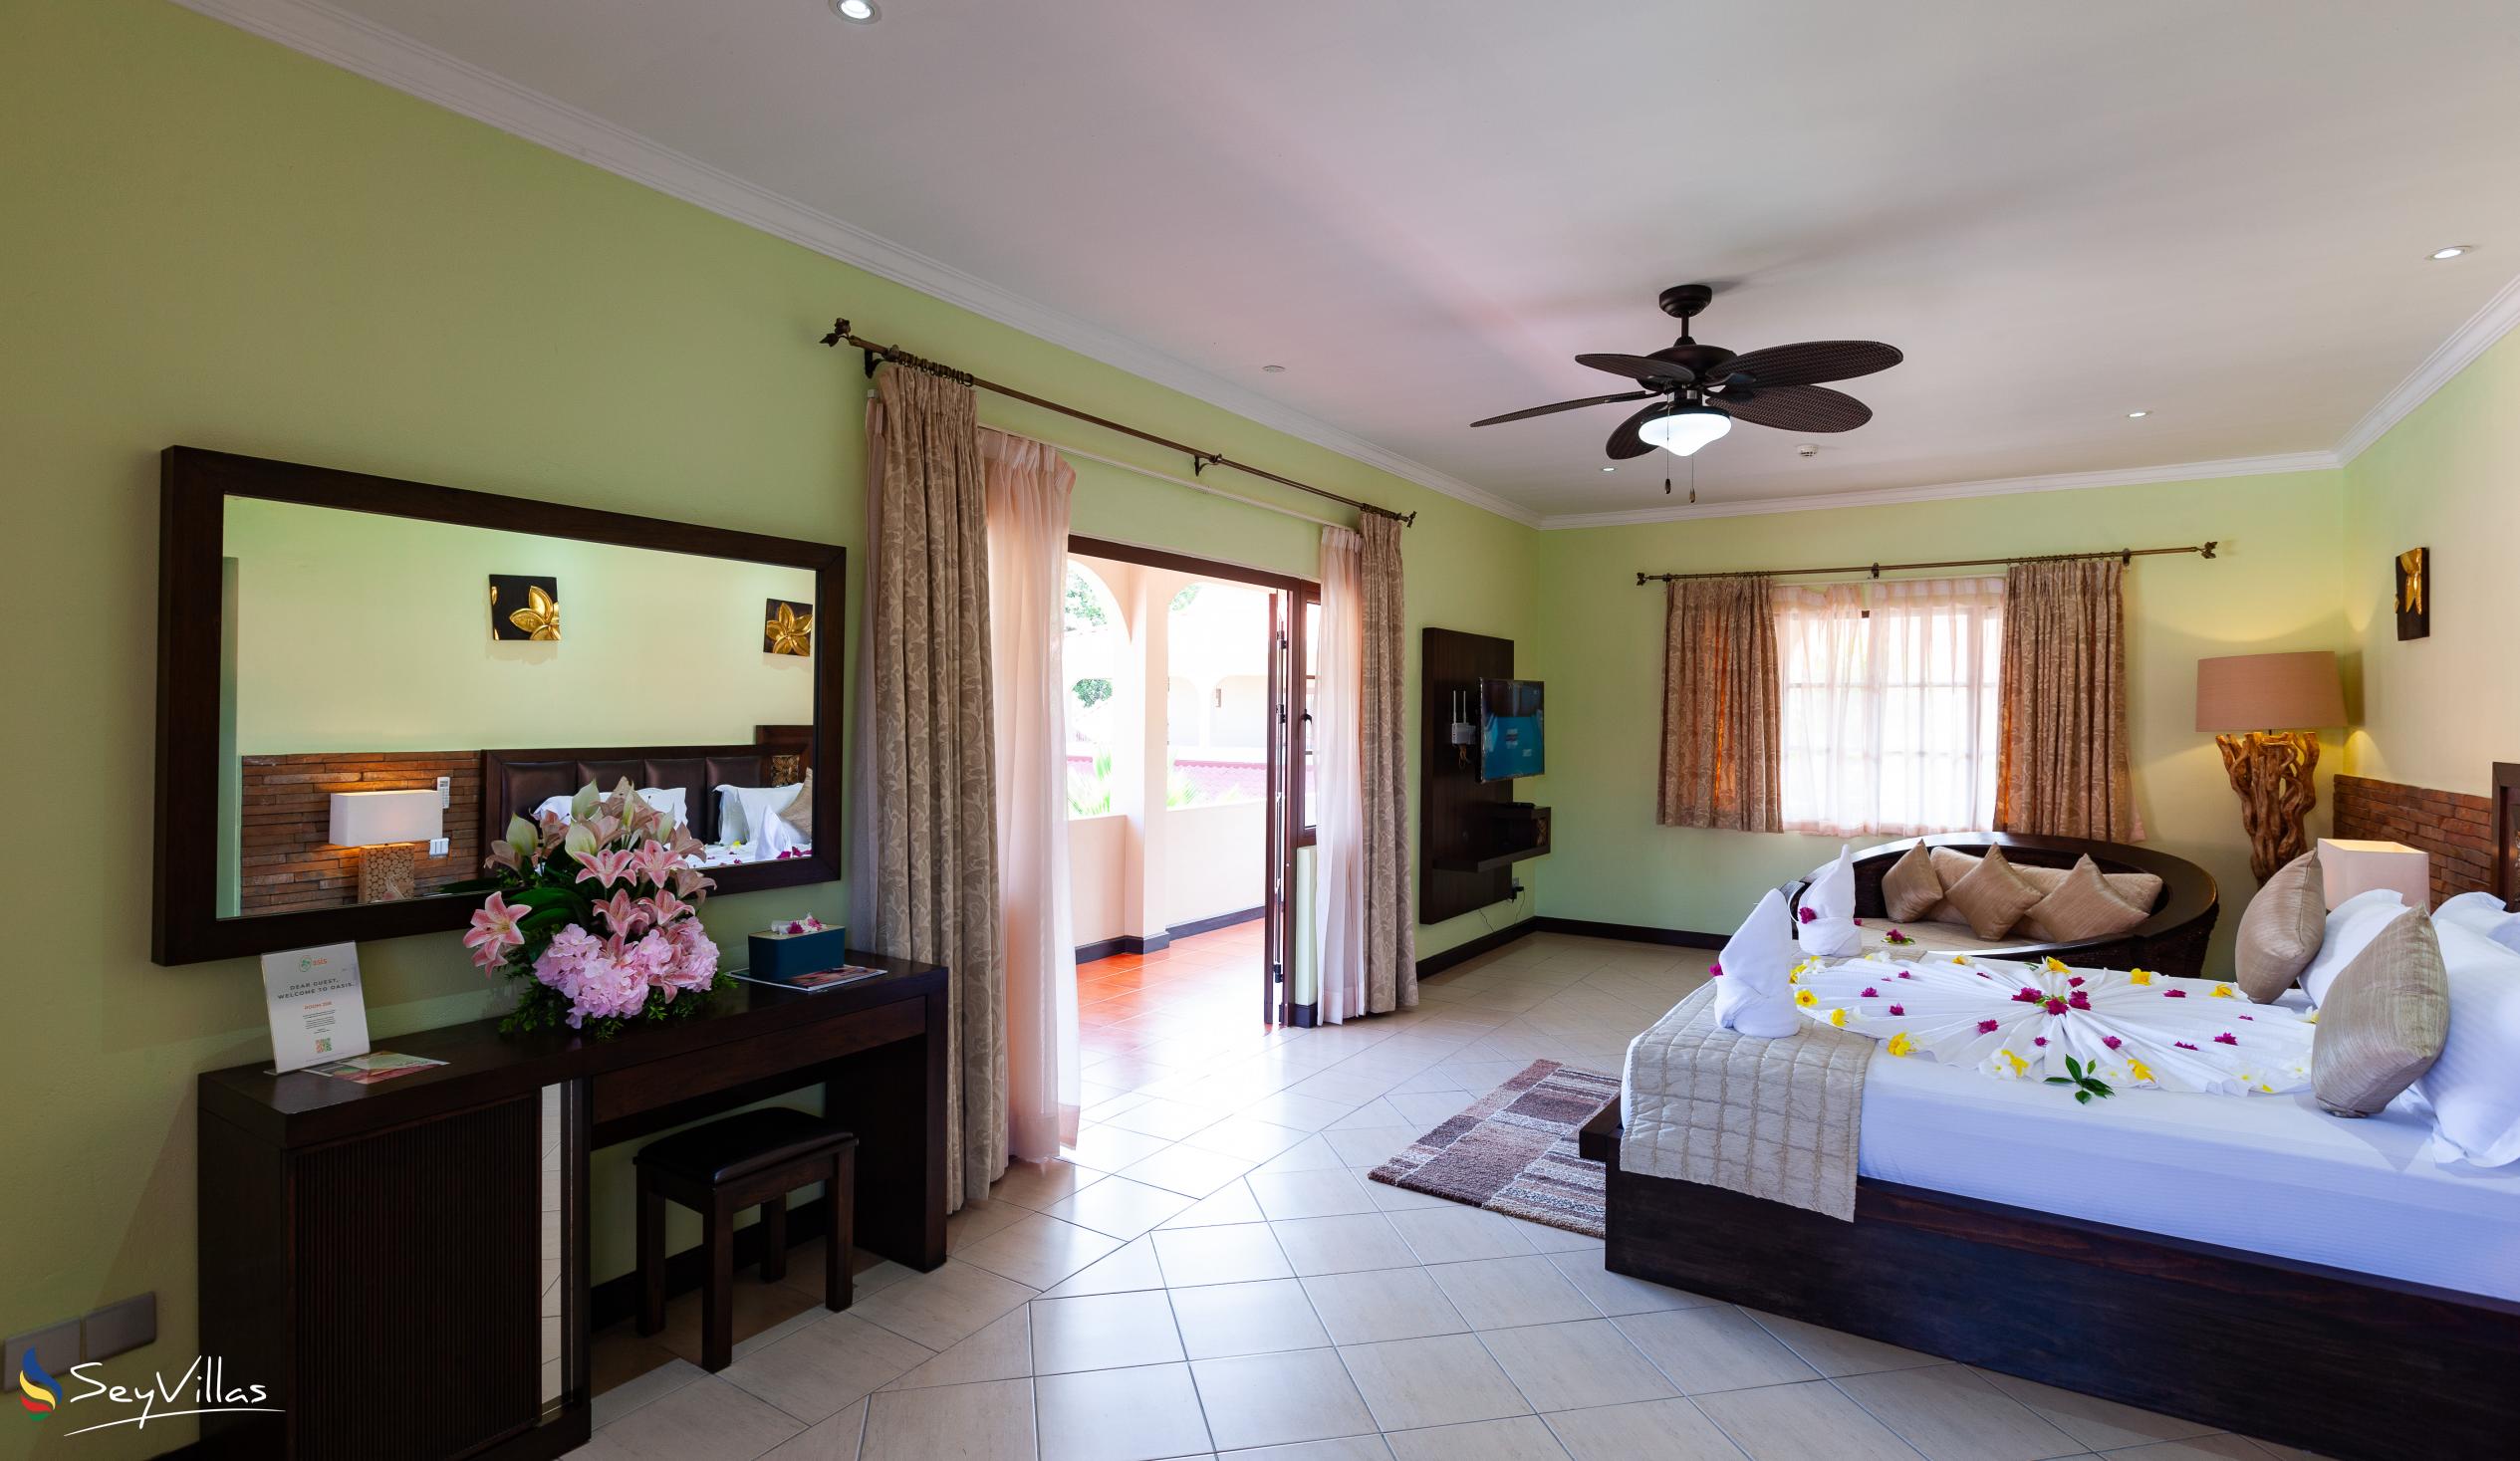 Photo 57: Oasis Hotel, Restaurant & Spa - Deluxe Room - Praslin (Seychelles)